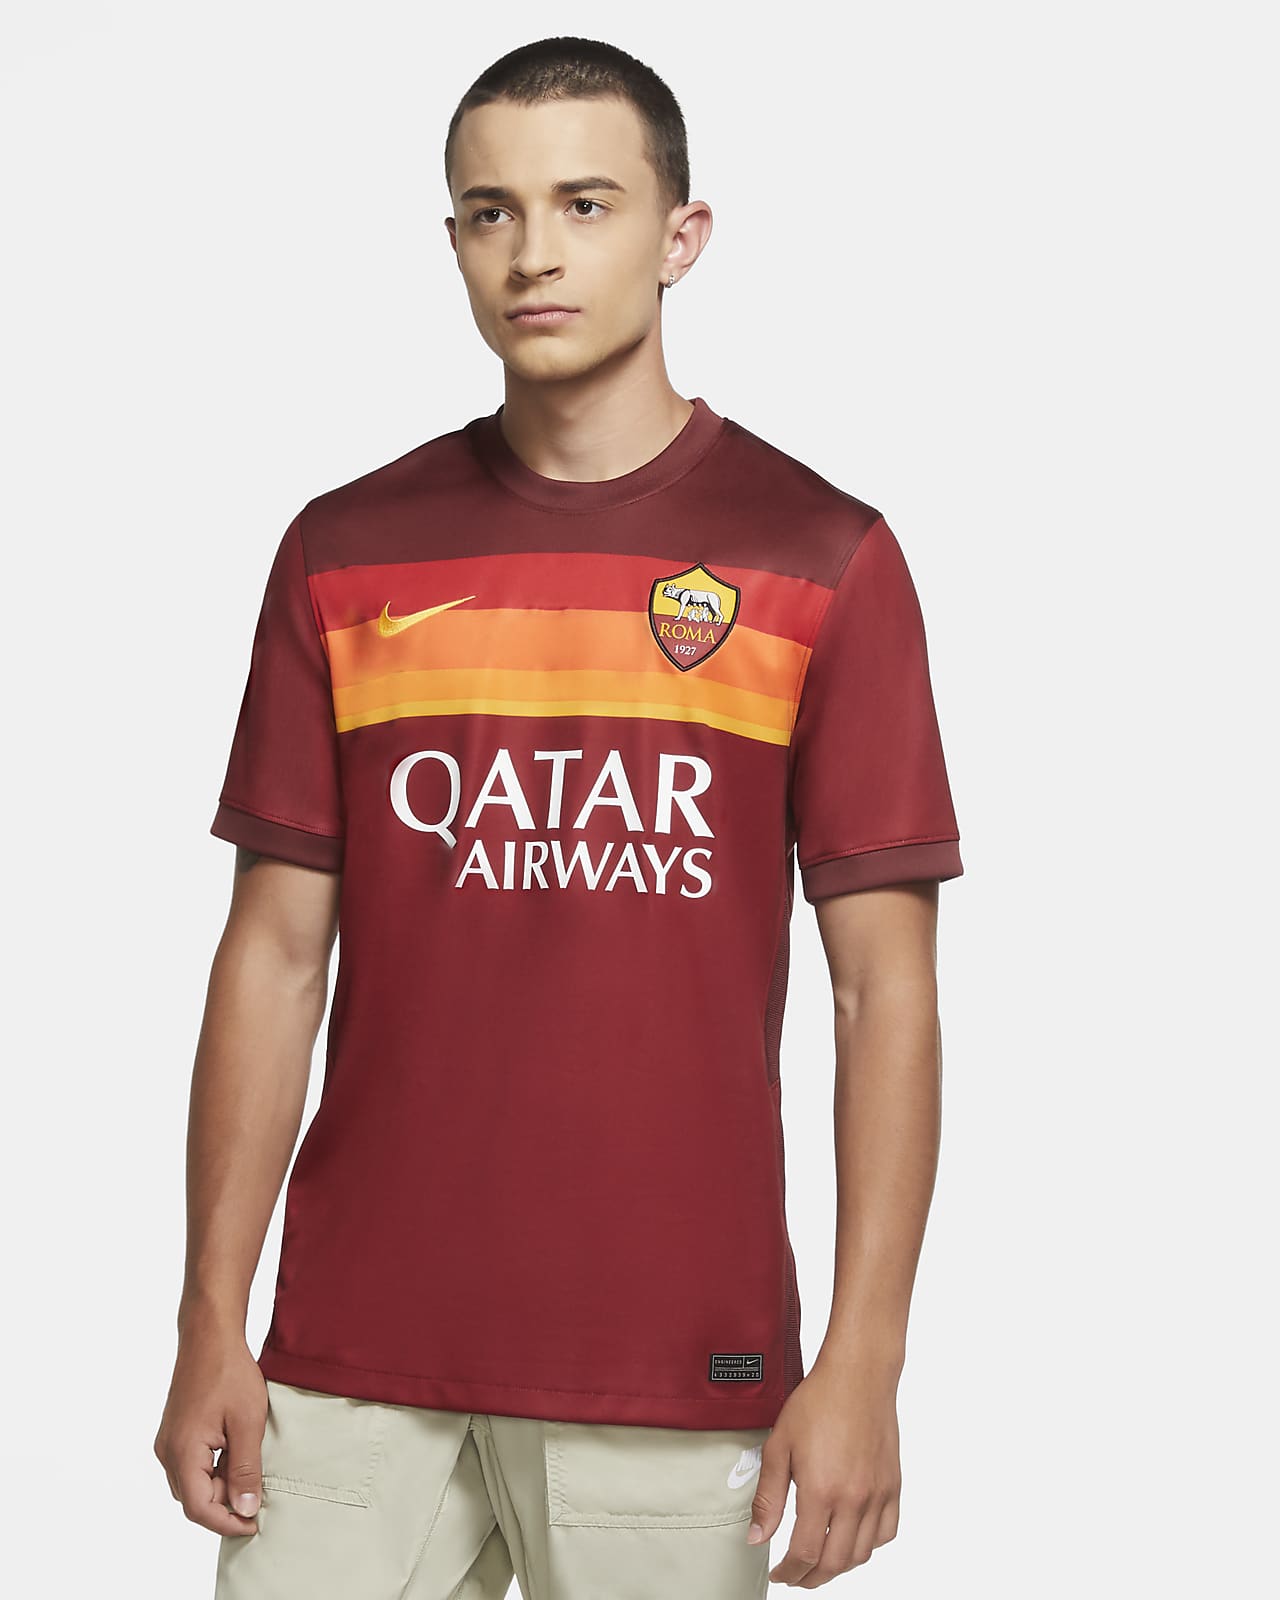 Camiseta de fútbol para hombre A.S. Roma 2020/21 Stadium Home. Nike CL